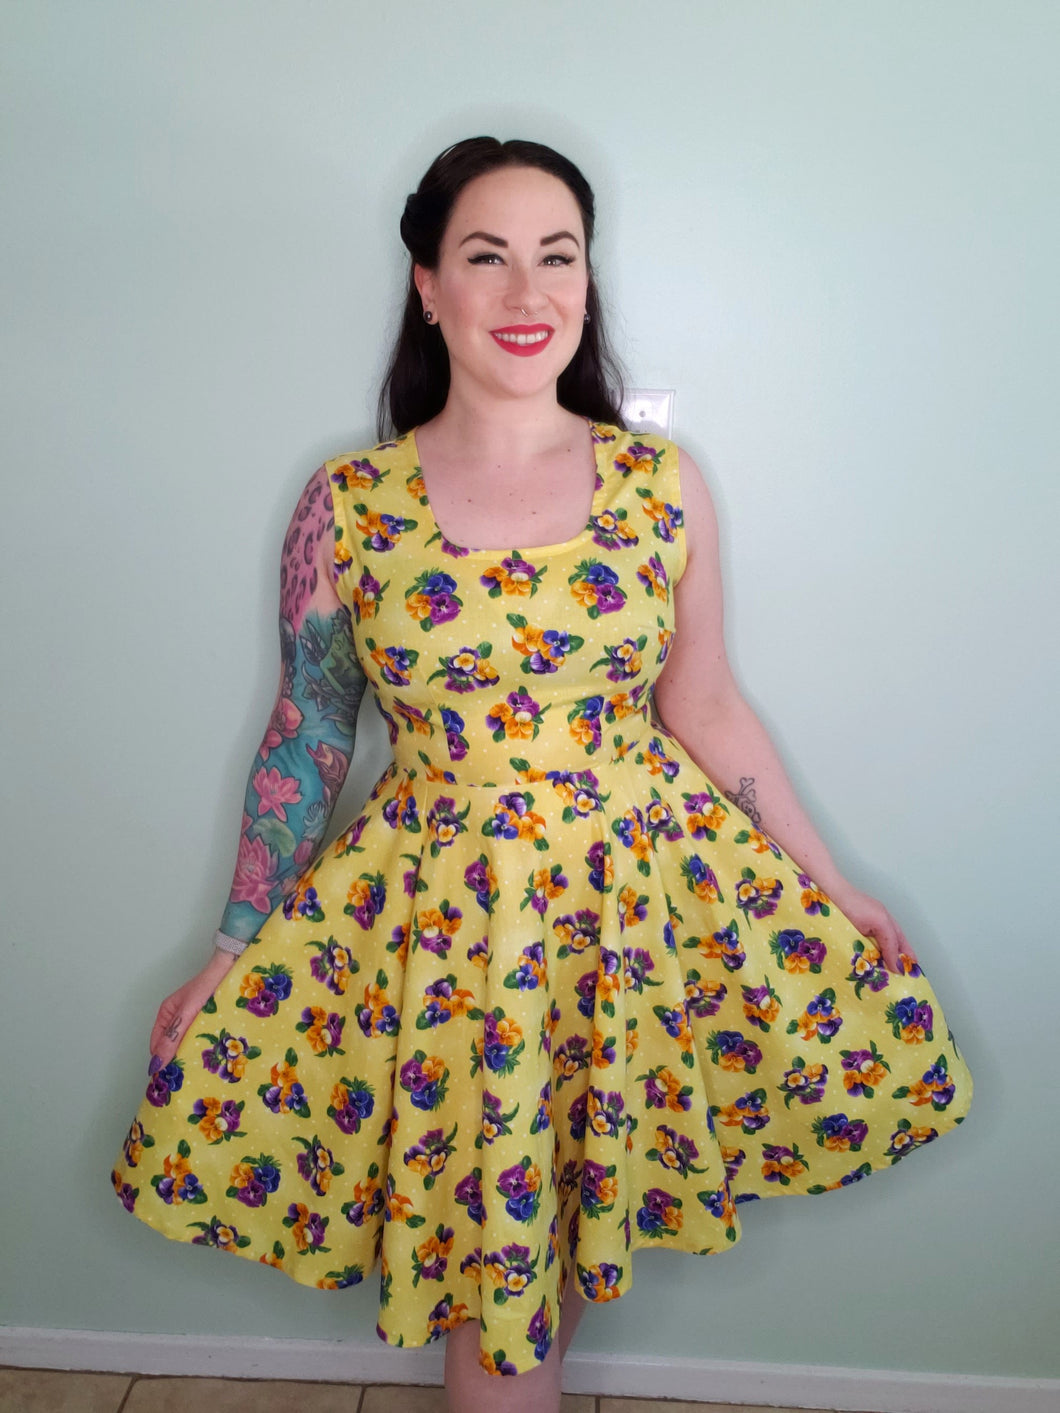 Rosemary Dress in Yellow Polka Dot Pansy